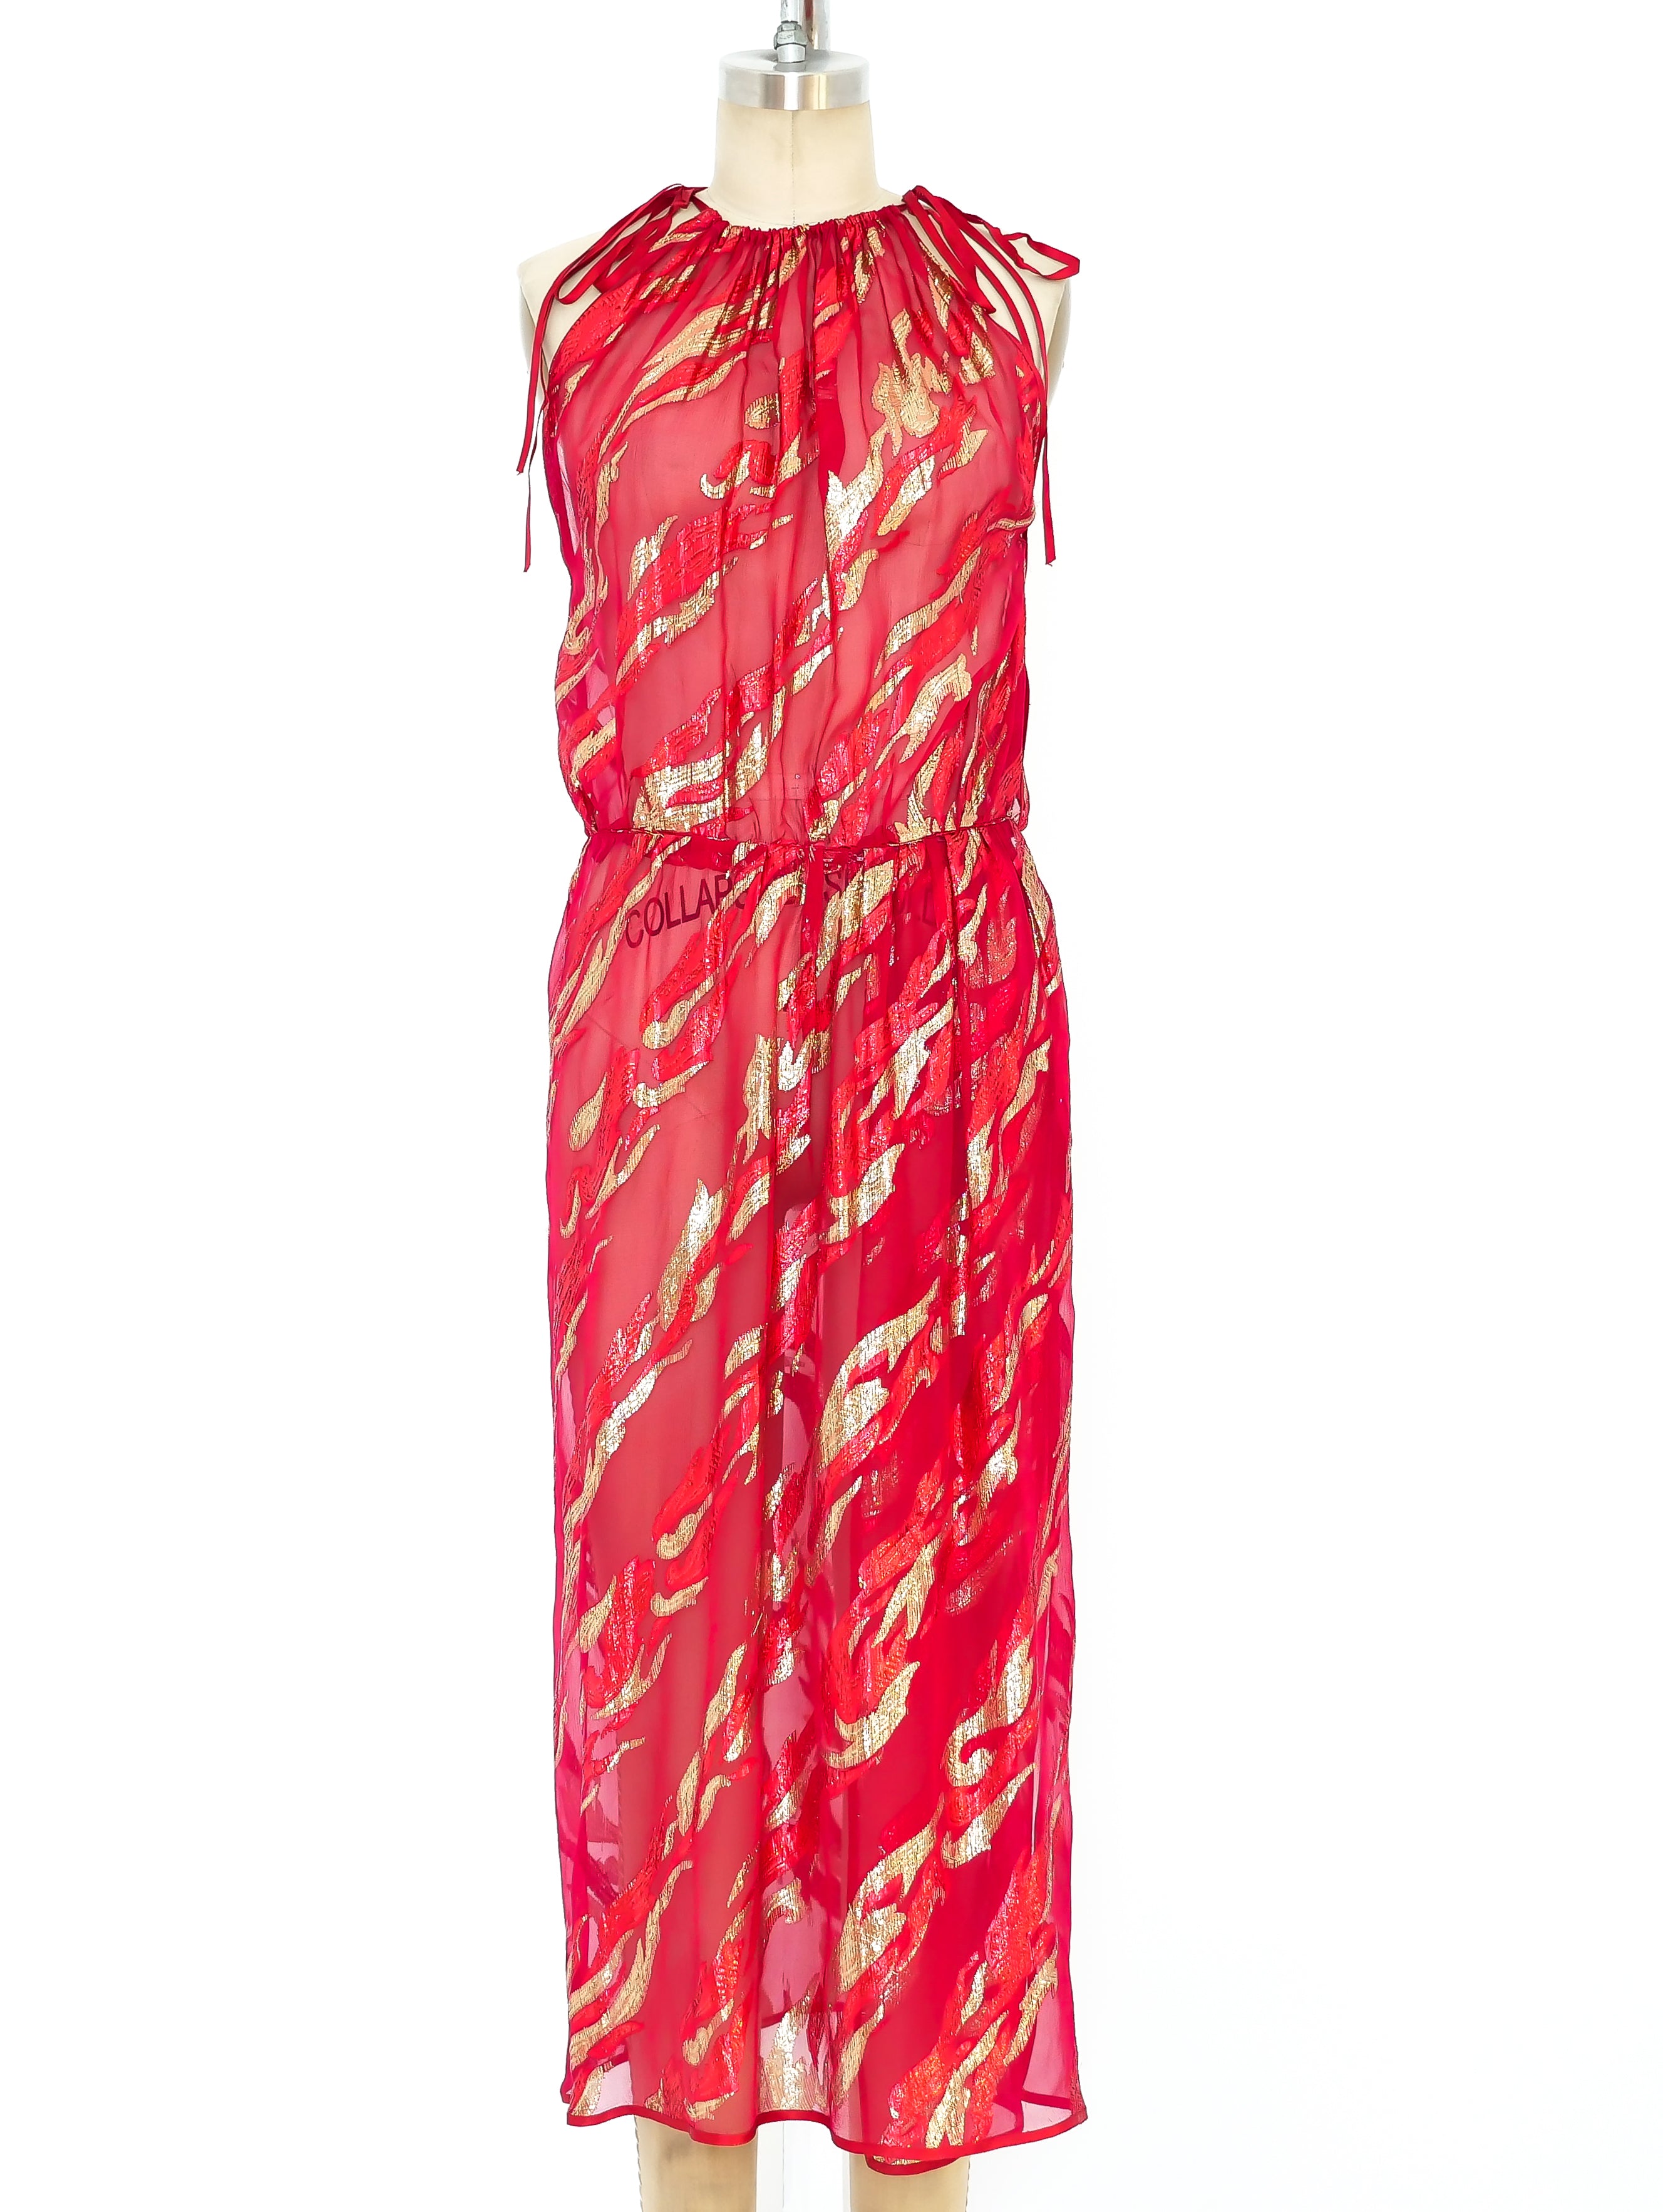 Yves Saint Laurent Metallic Silk Chiffon Dress